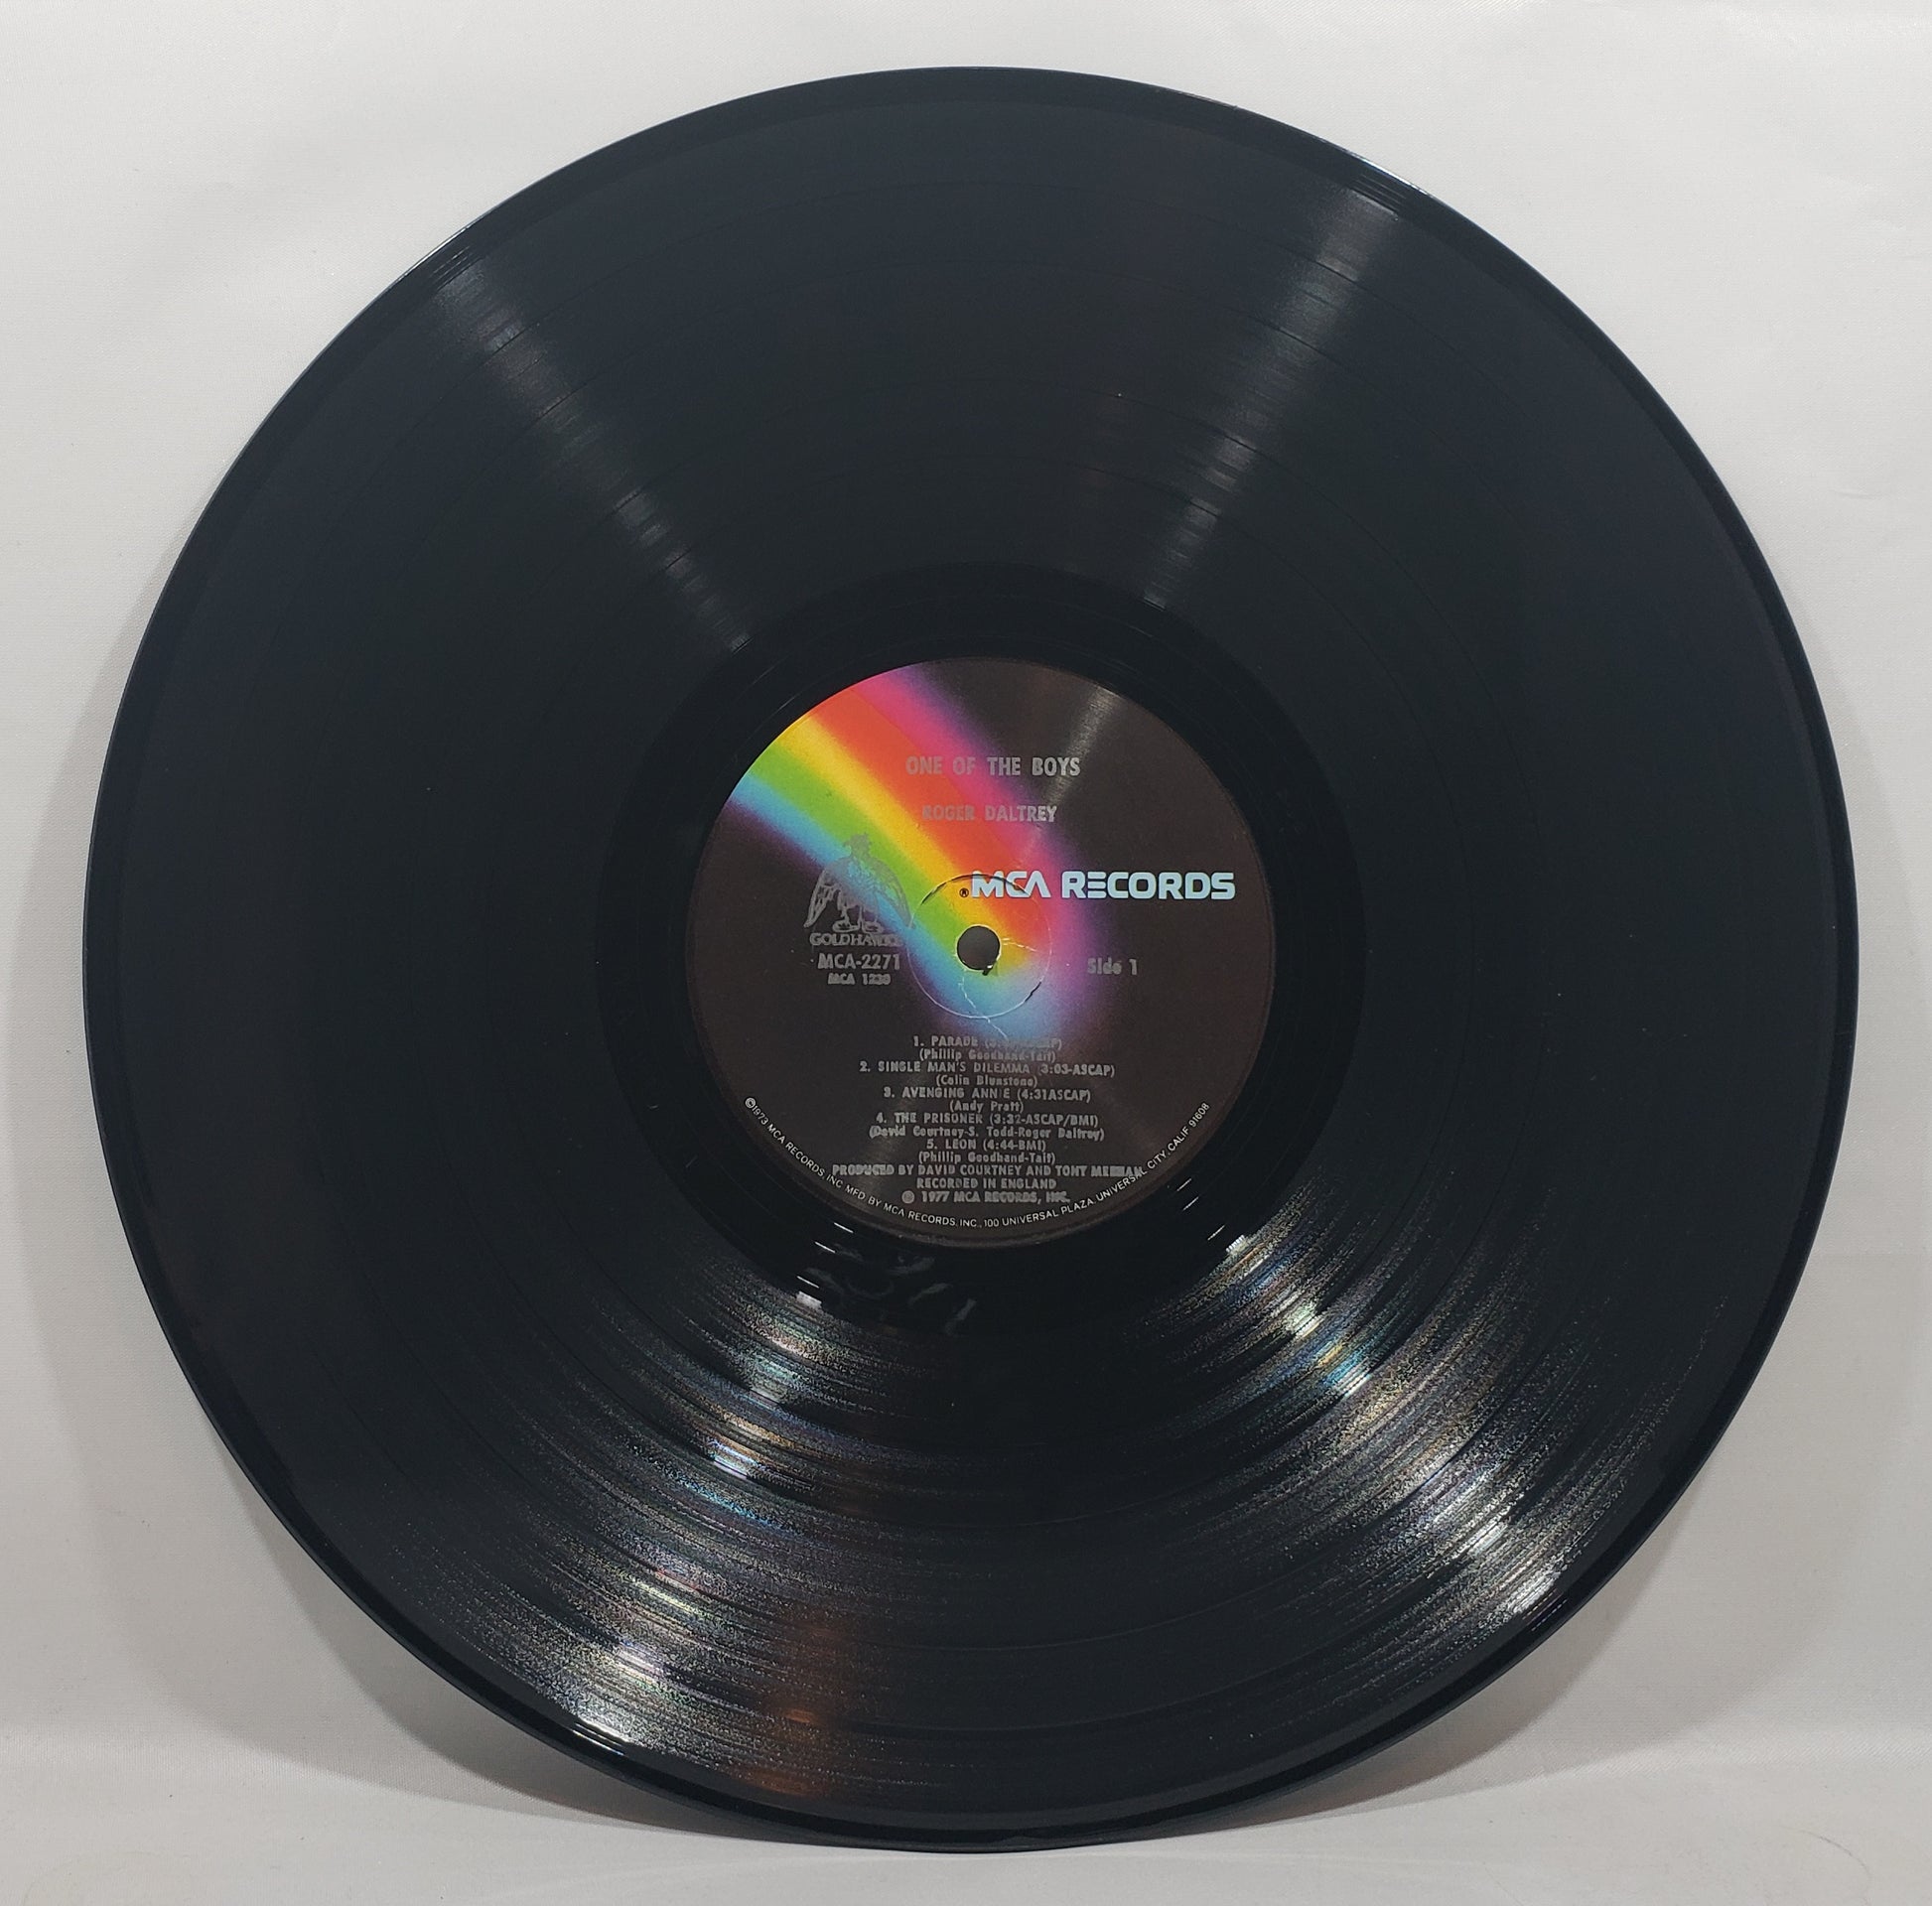 Roger Daltrey - One of the Boys [1977 Gloversville] [Used Vinyl Record LP]